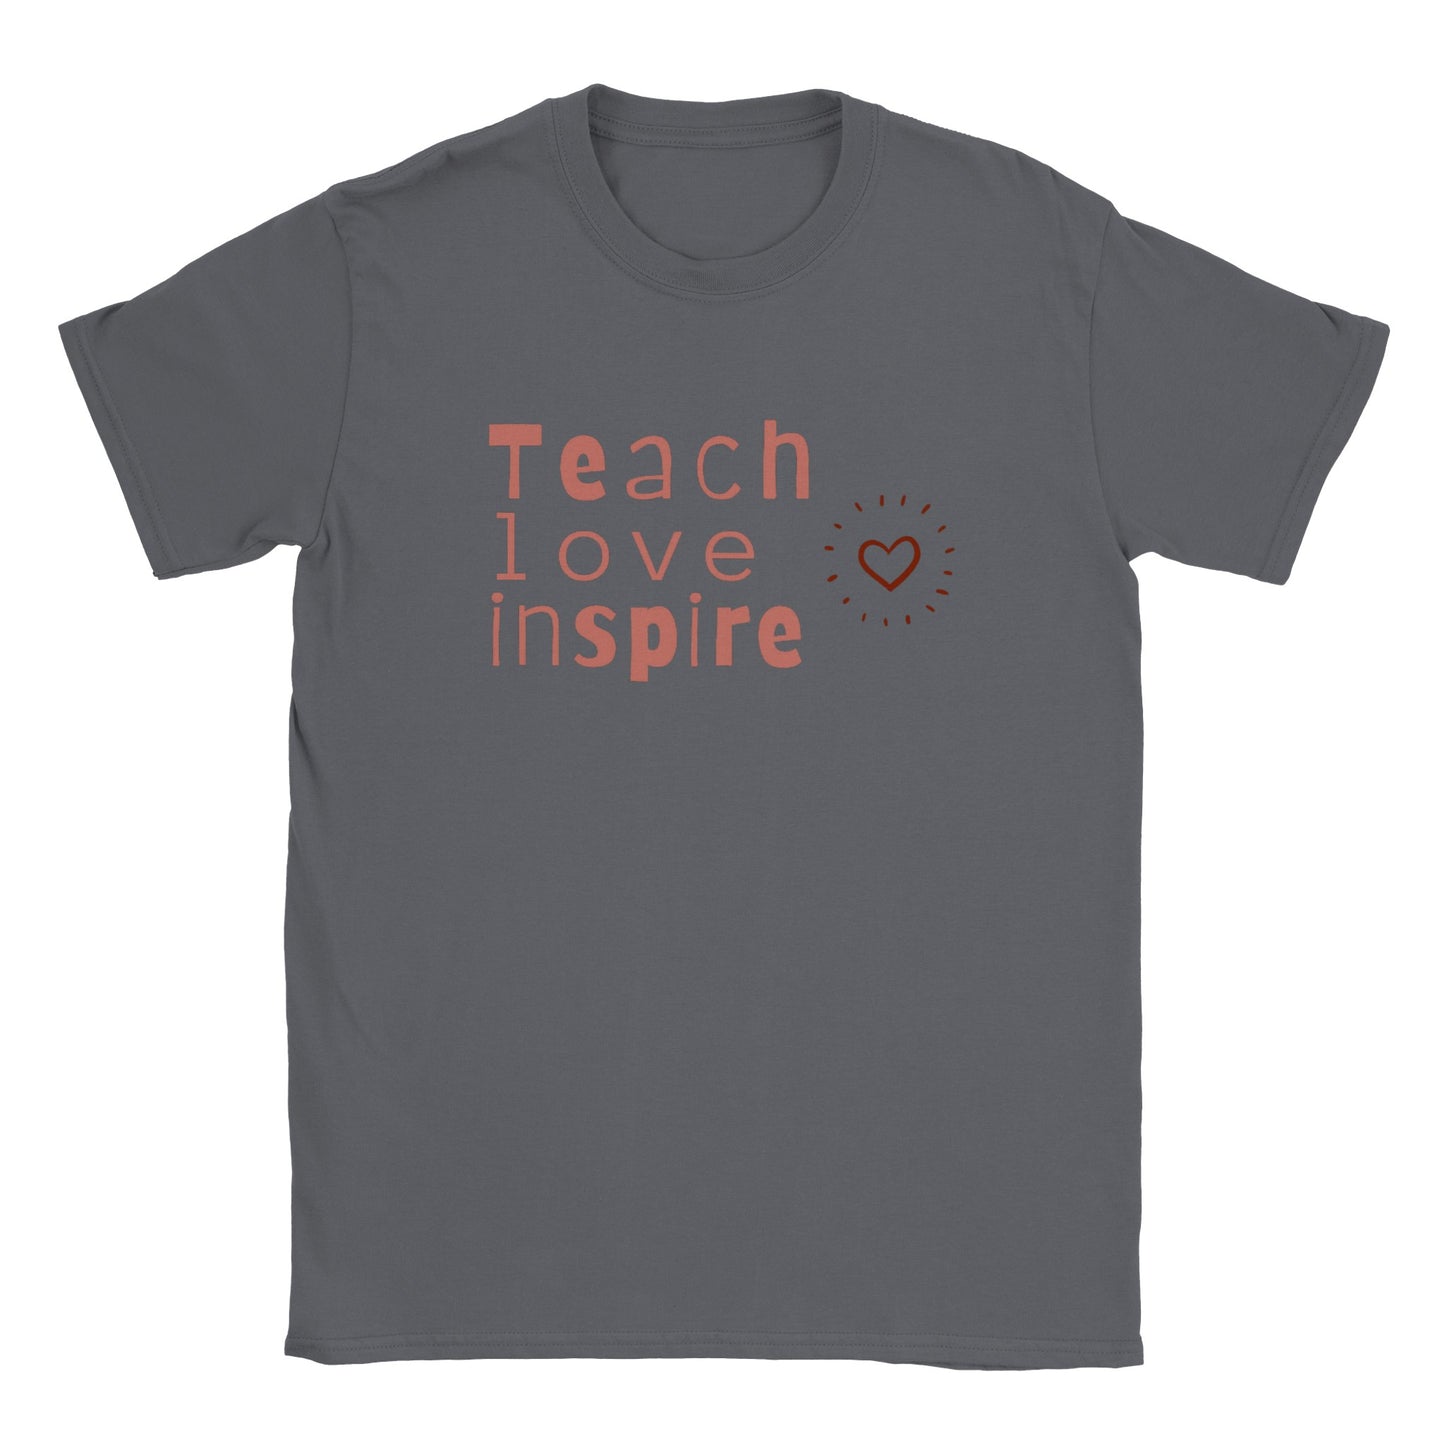 Teach, Love, Inspire - Classic Unisex Crewneck T-shirt